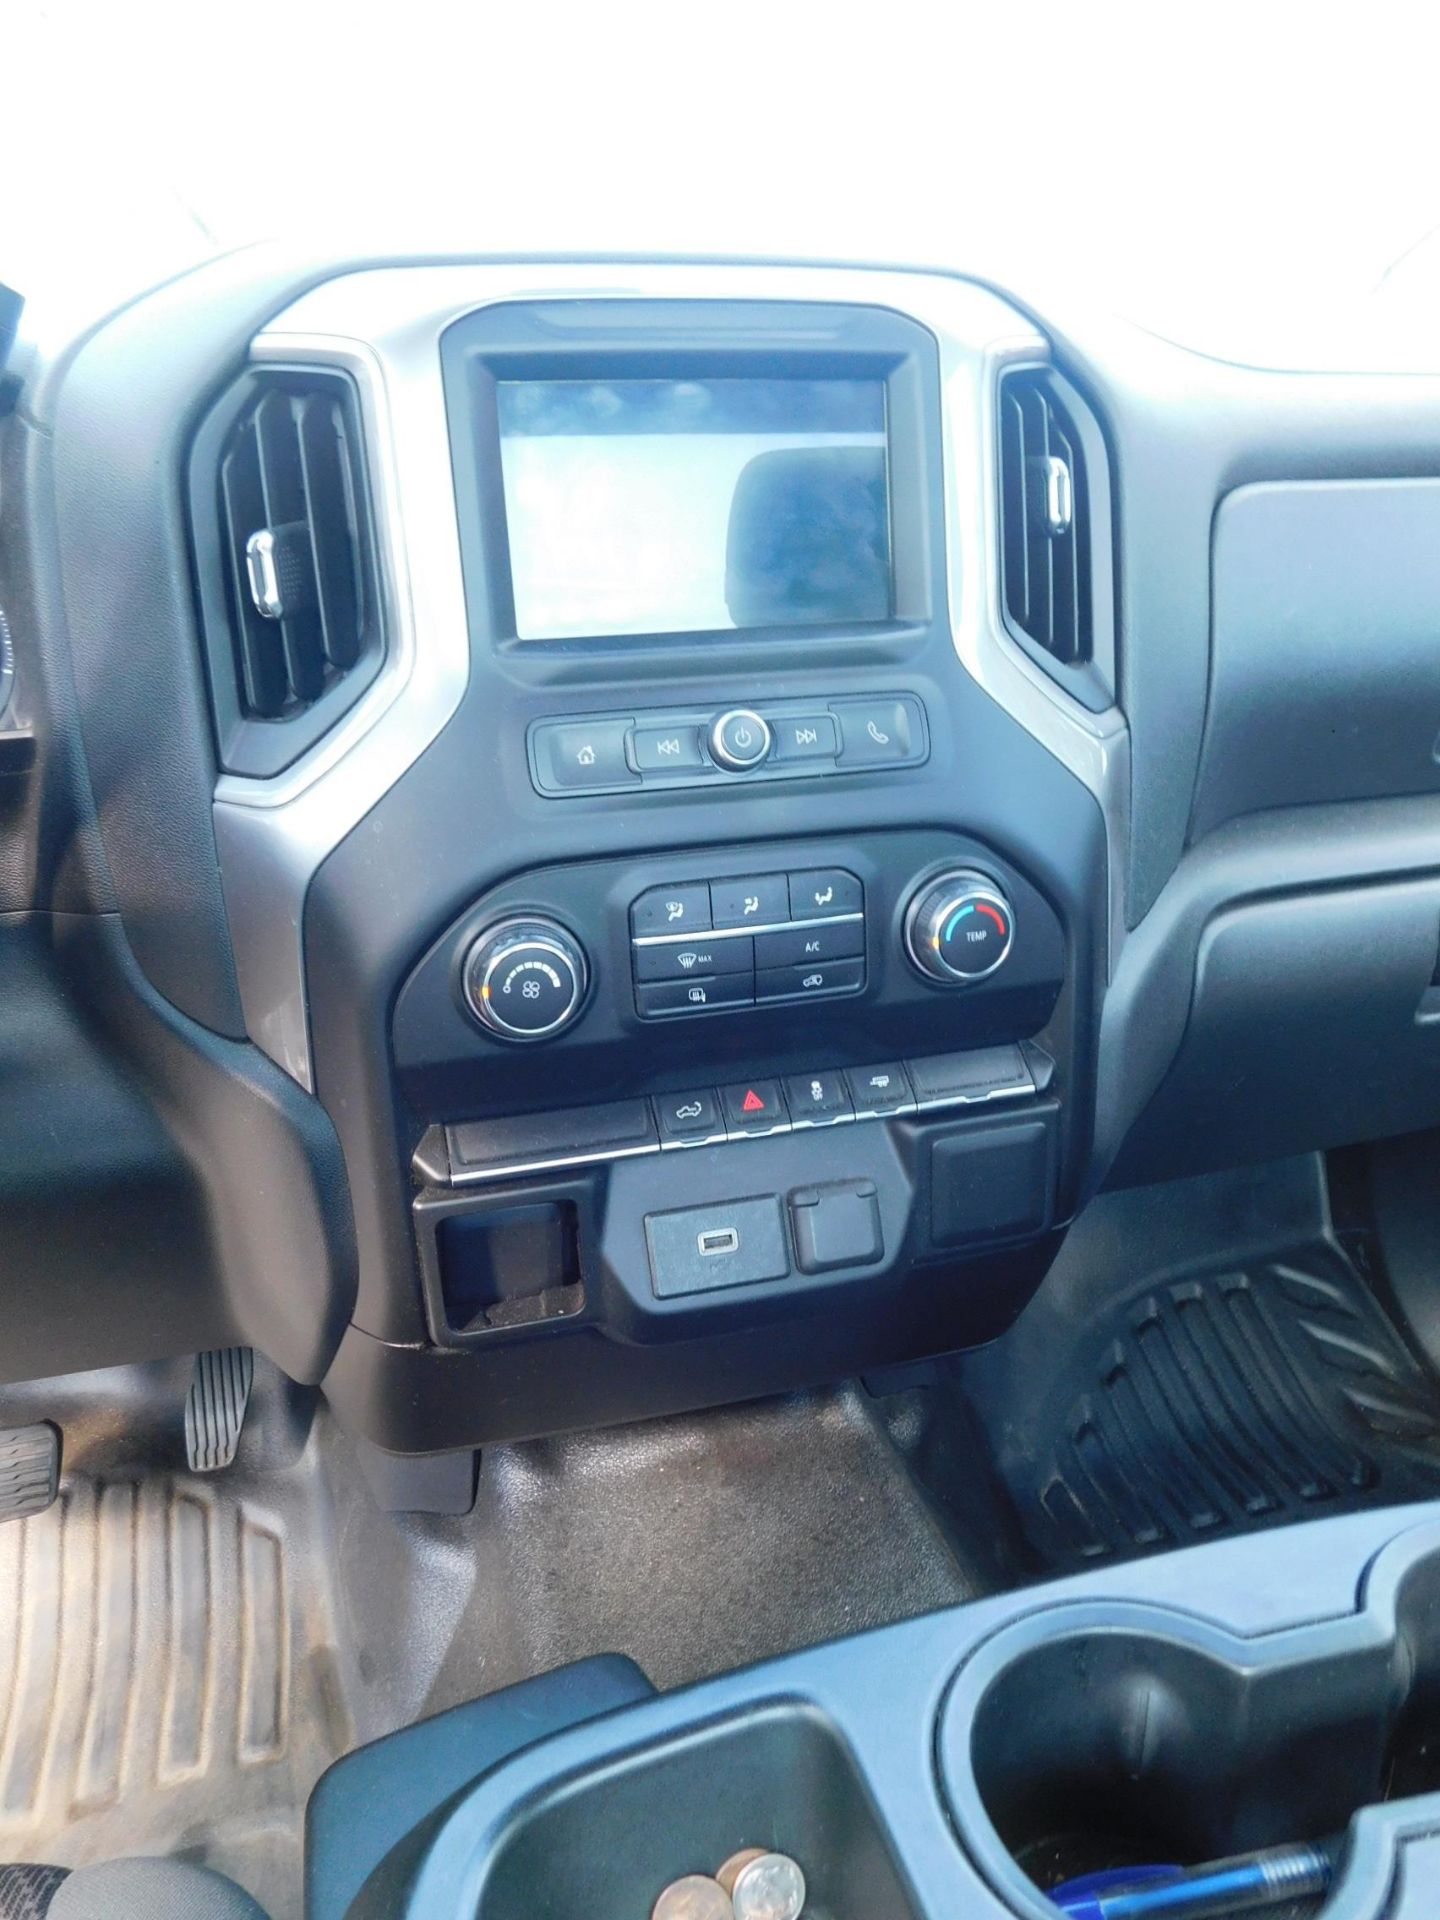 2019 Chevrolet Silverado Model 1500 Pick-Up Truck, VIN 3GCNWAEF2KG233058, Regular Cab, Auto, 8’ Bed, - Image 14 of 29